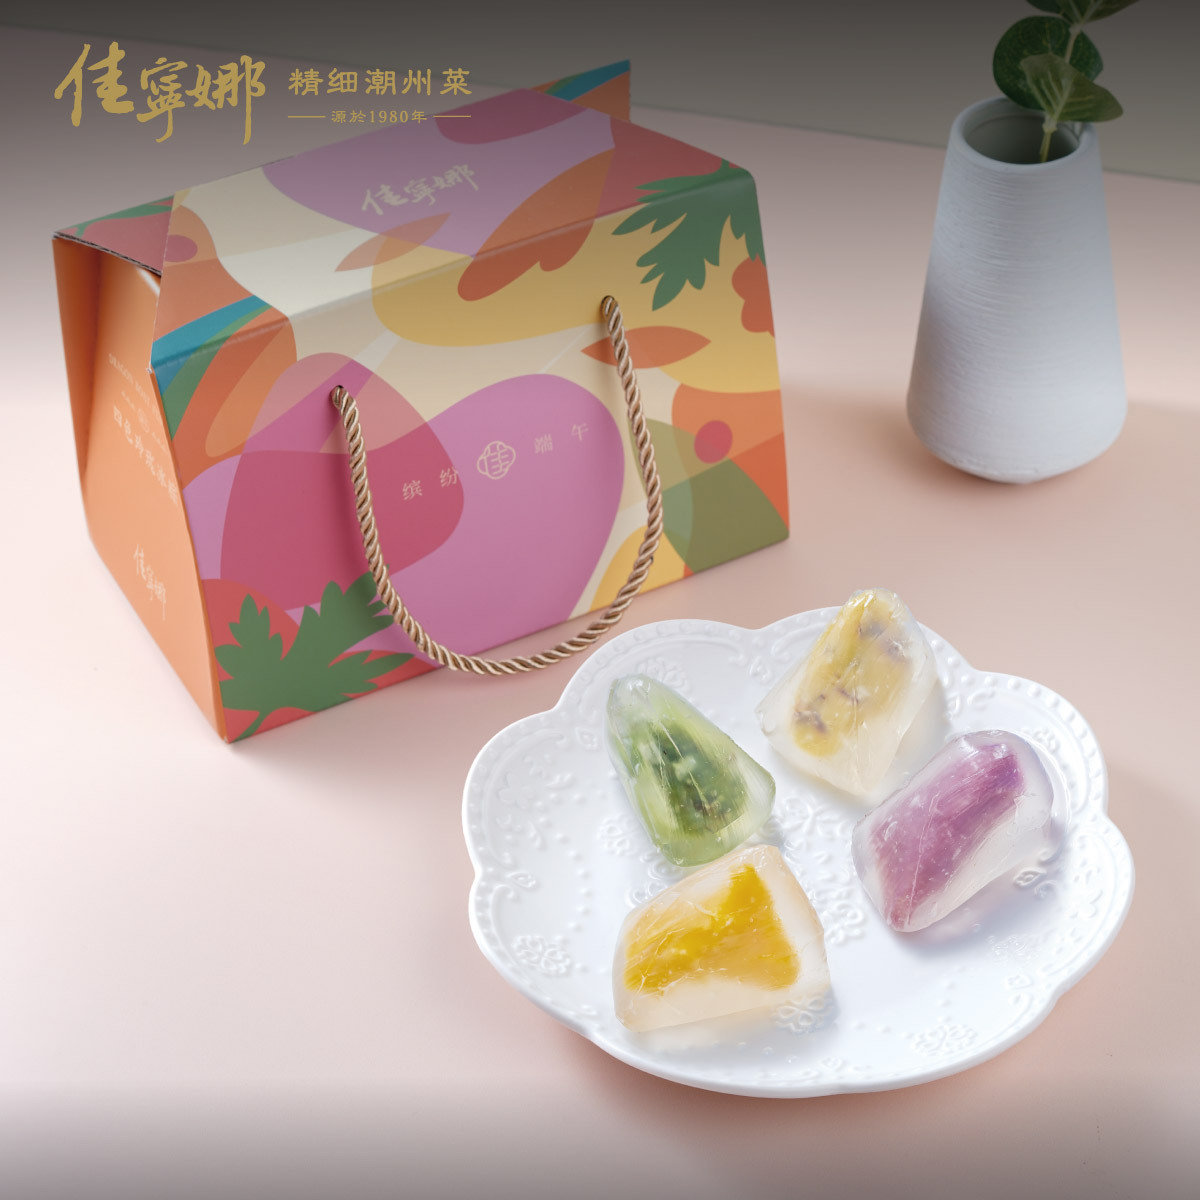 1 Set - Crystal Rice Dumpling Gift Set (Total 12 pcs)【Self Pick-up Only】